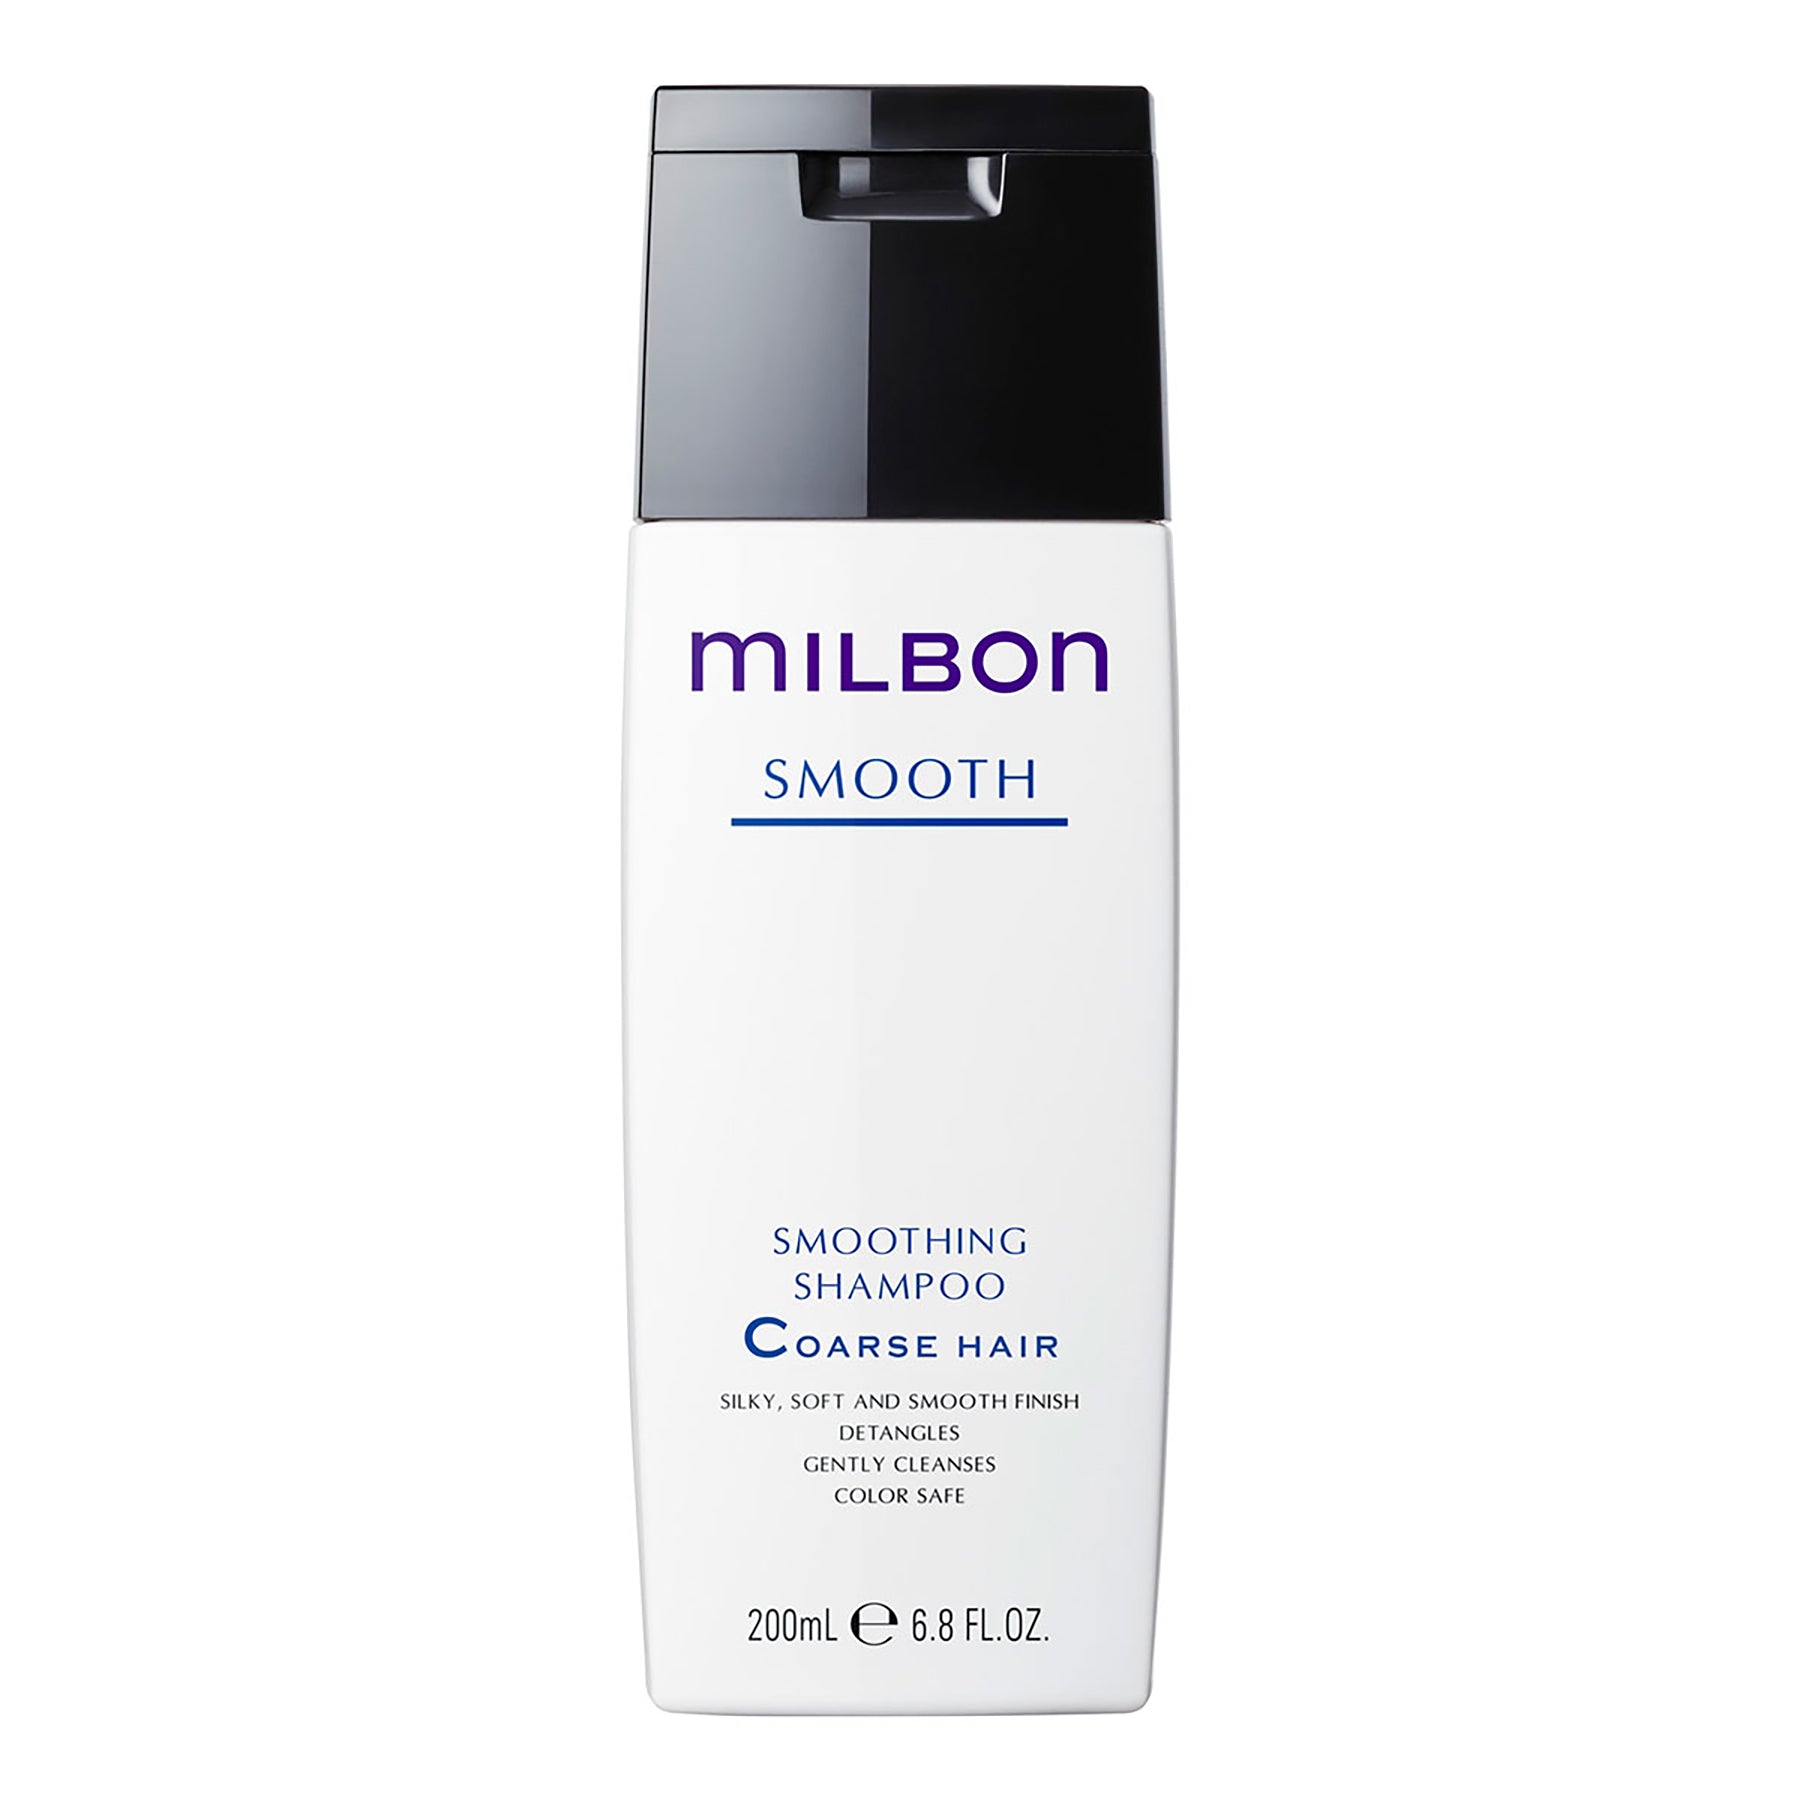 Milbon Smooth Smoothing Shampoo Coarse Hair